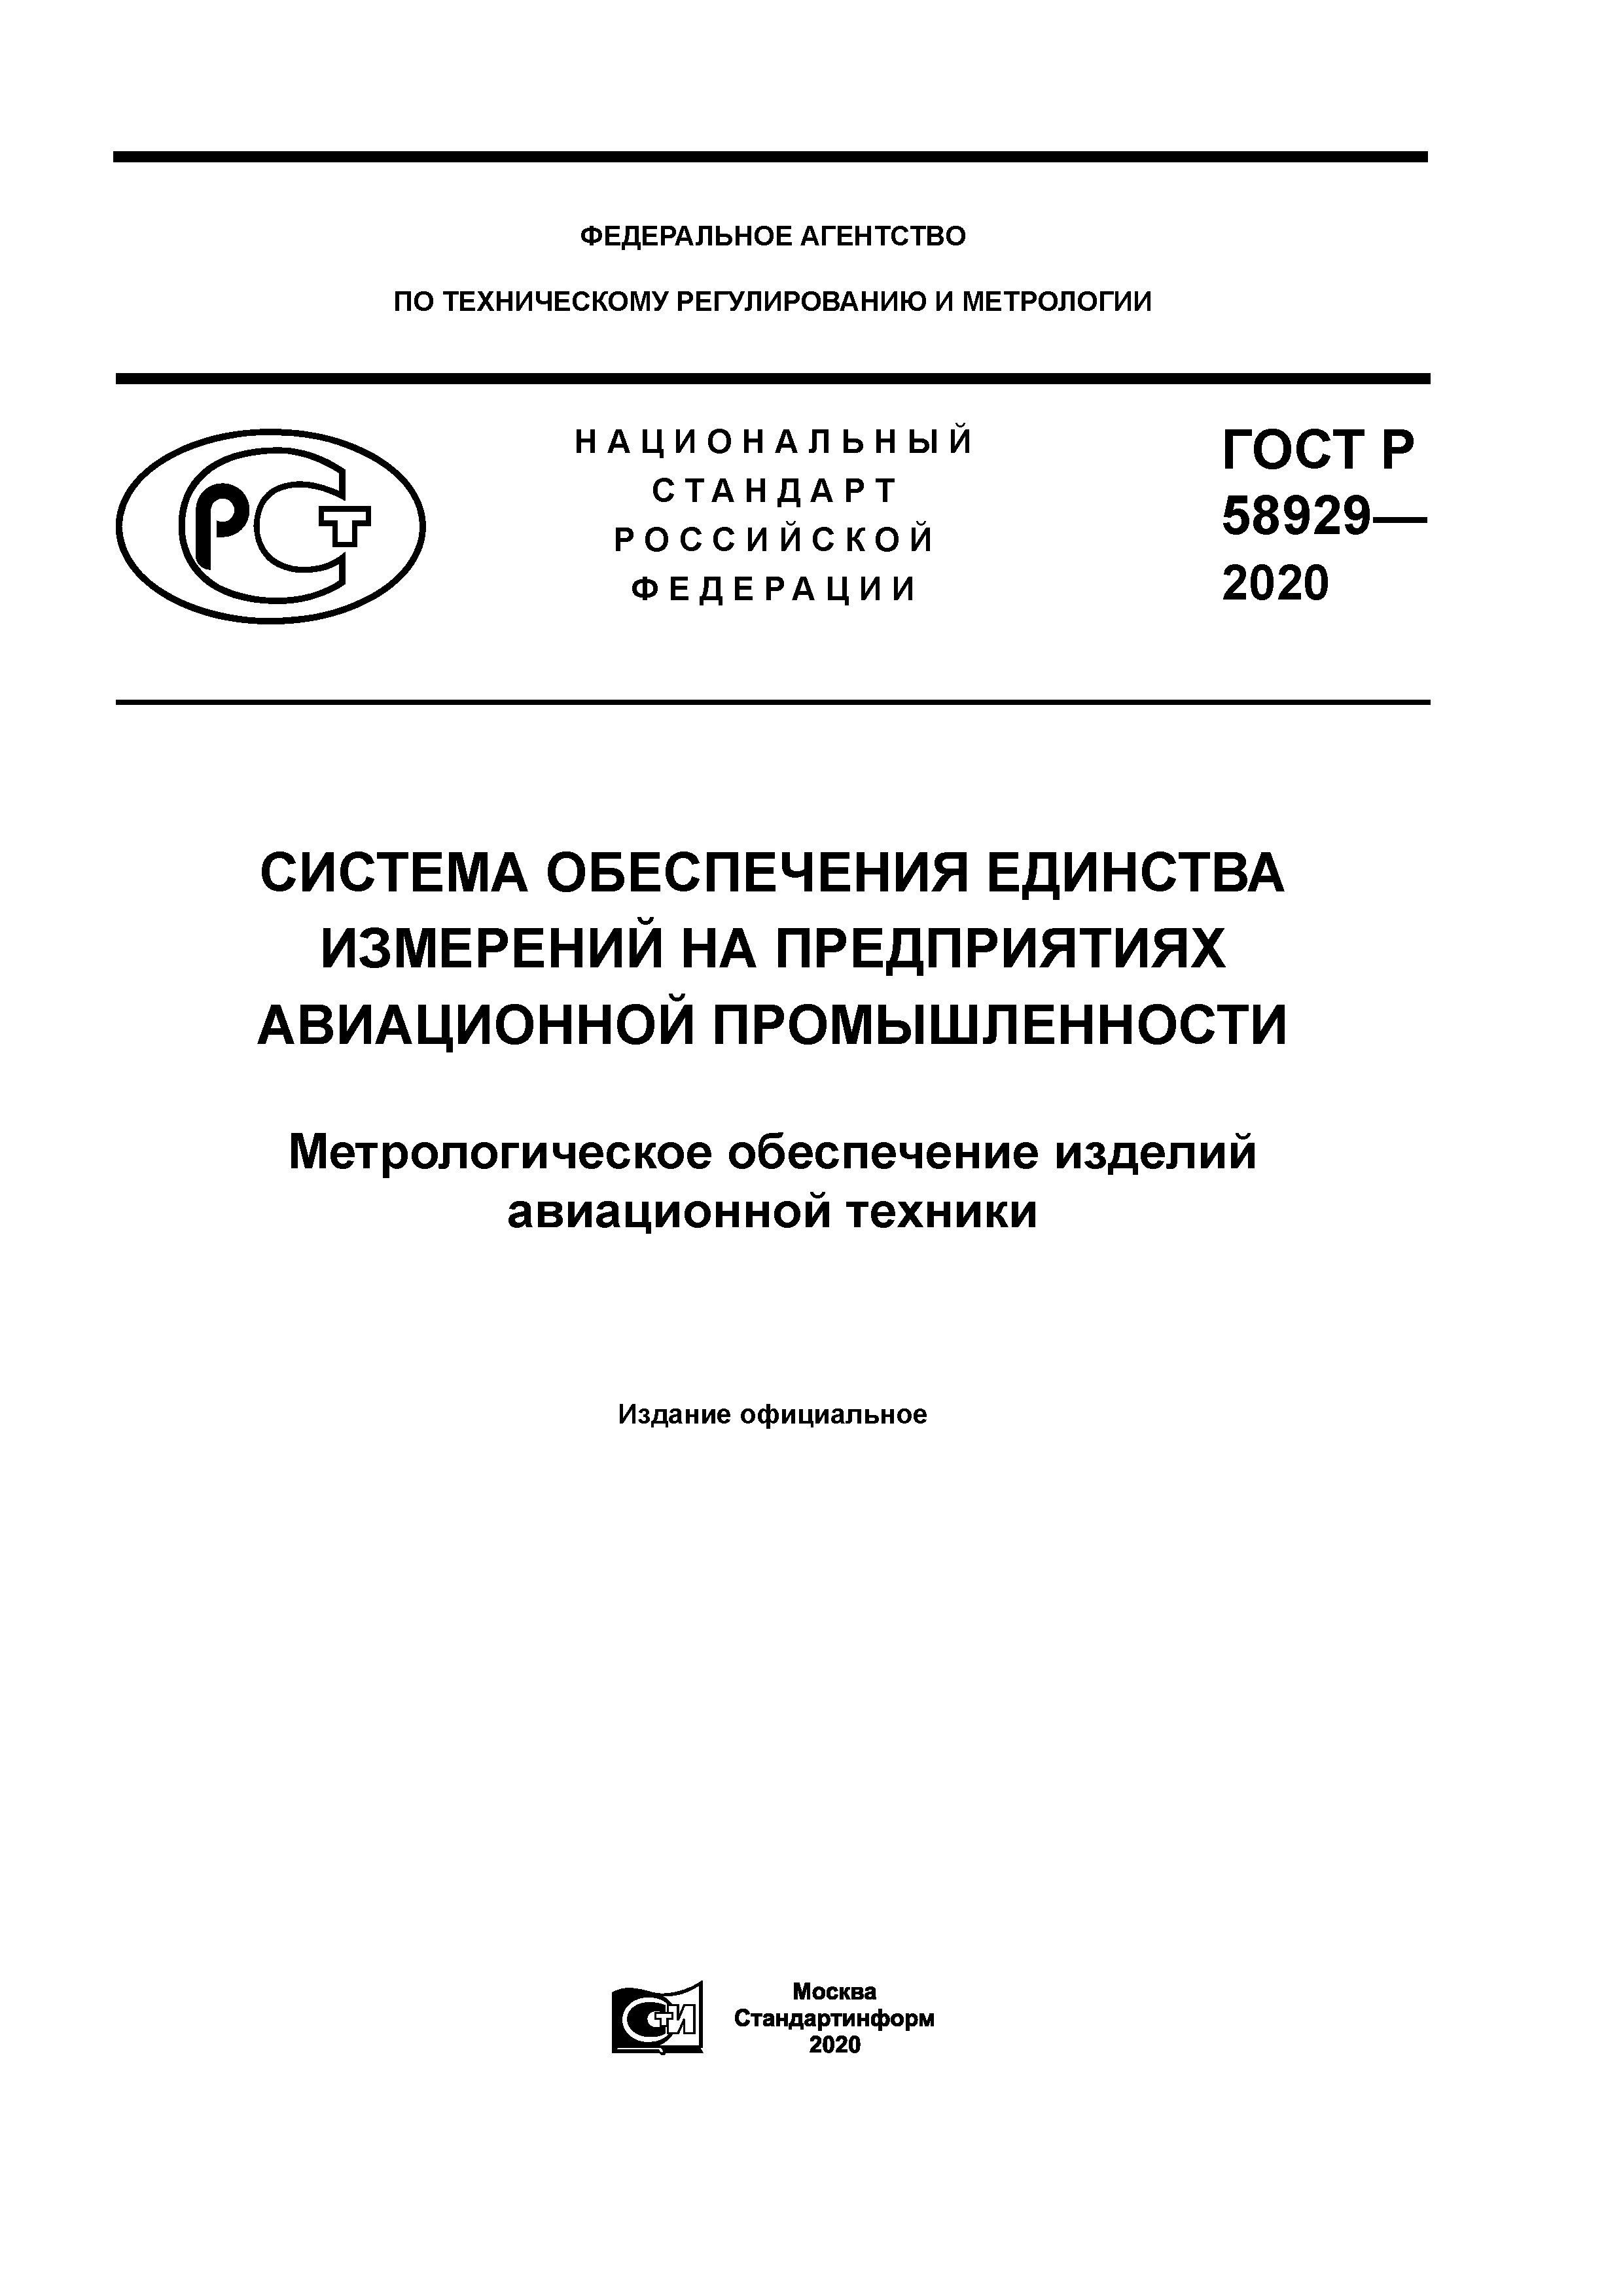 ГОСТ Р 58929-2020